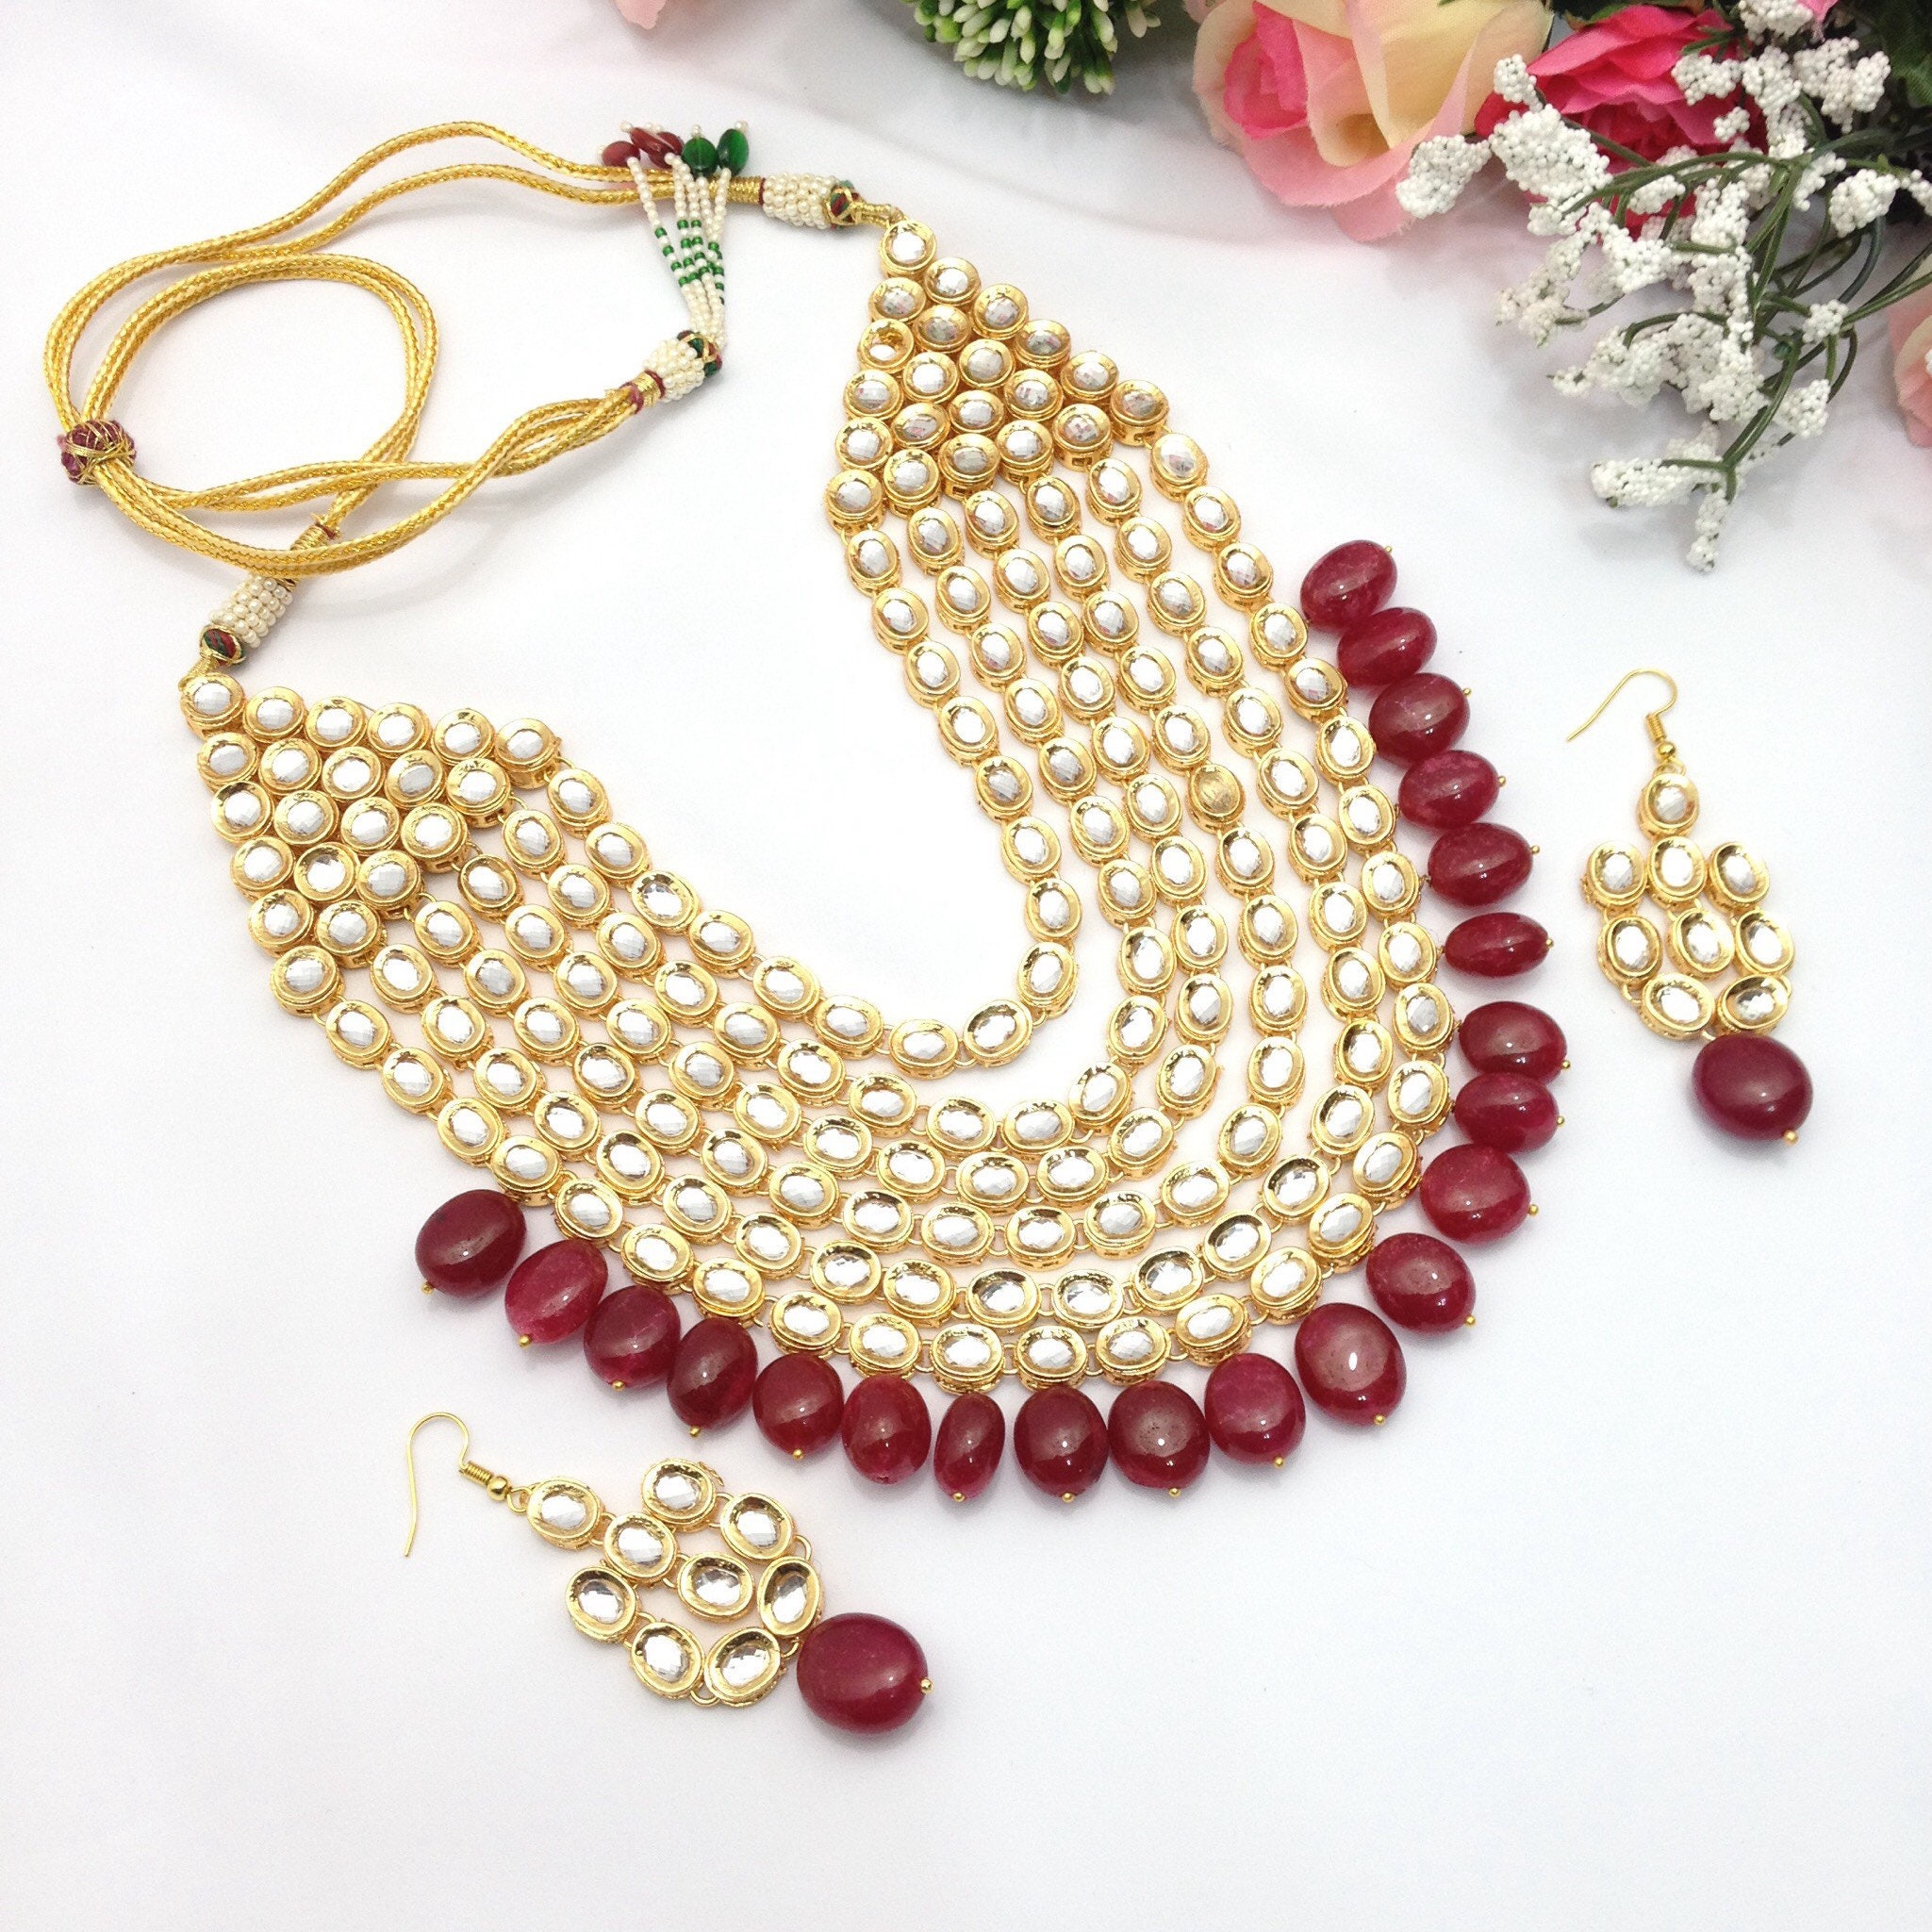 Handmade Real Kundan Necklace With Earrings Indian Jewelry Set - Etsy UK